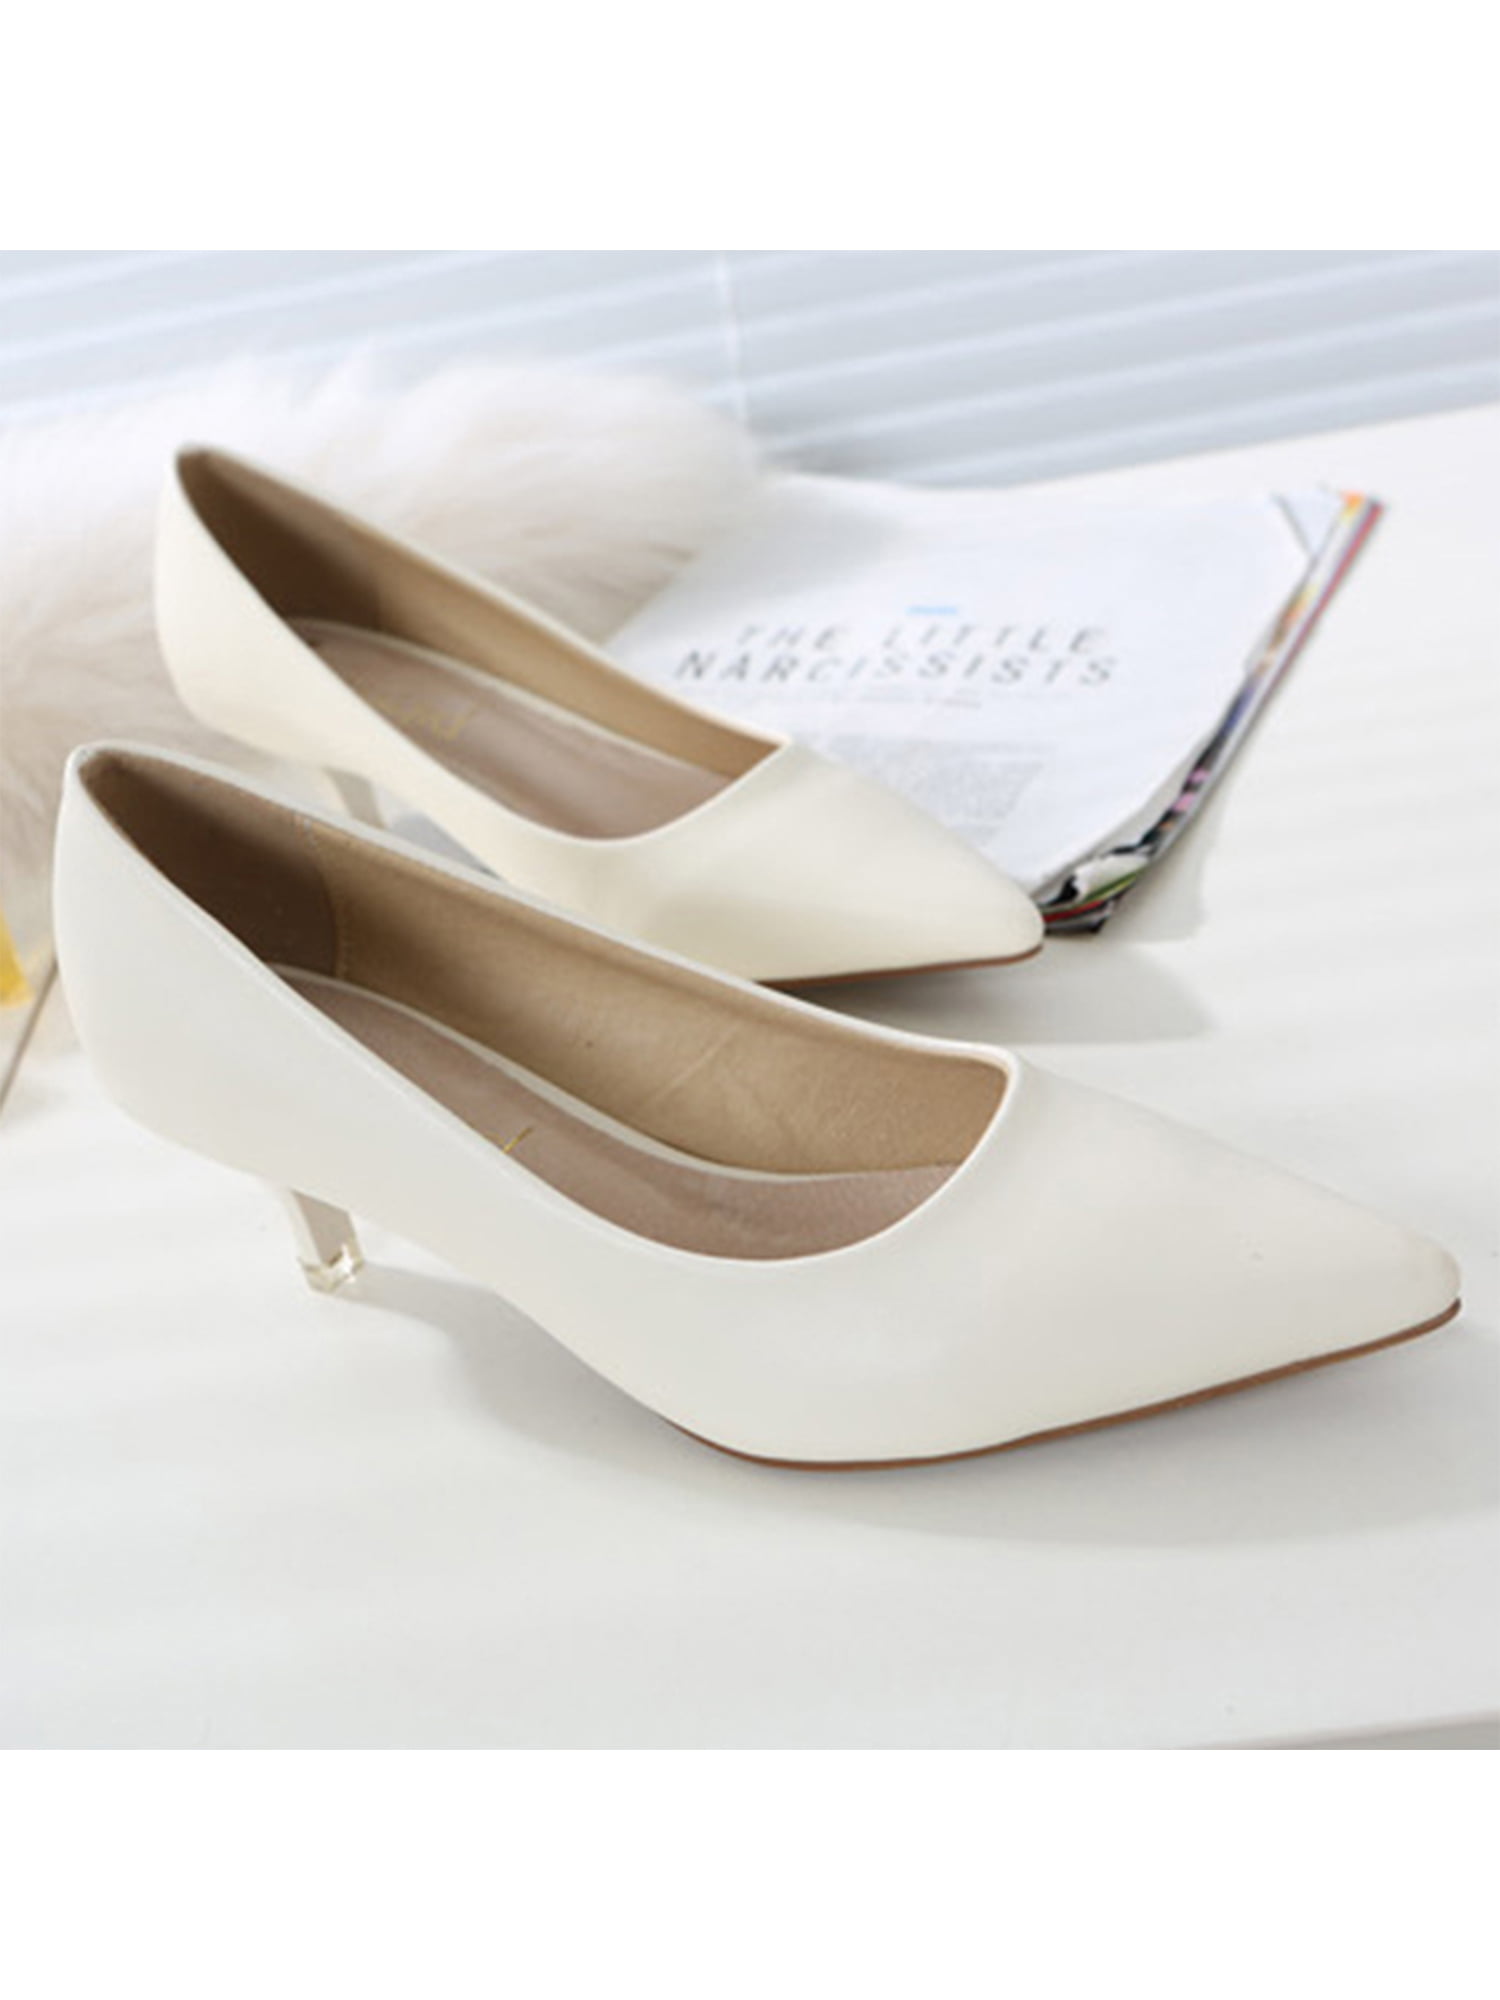 Satin Wedding Shoes with Pearls | Bridal Satin Kitten Heels | Mandarina  Shoes